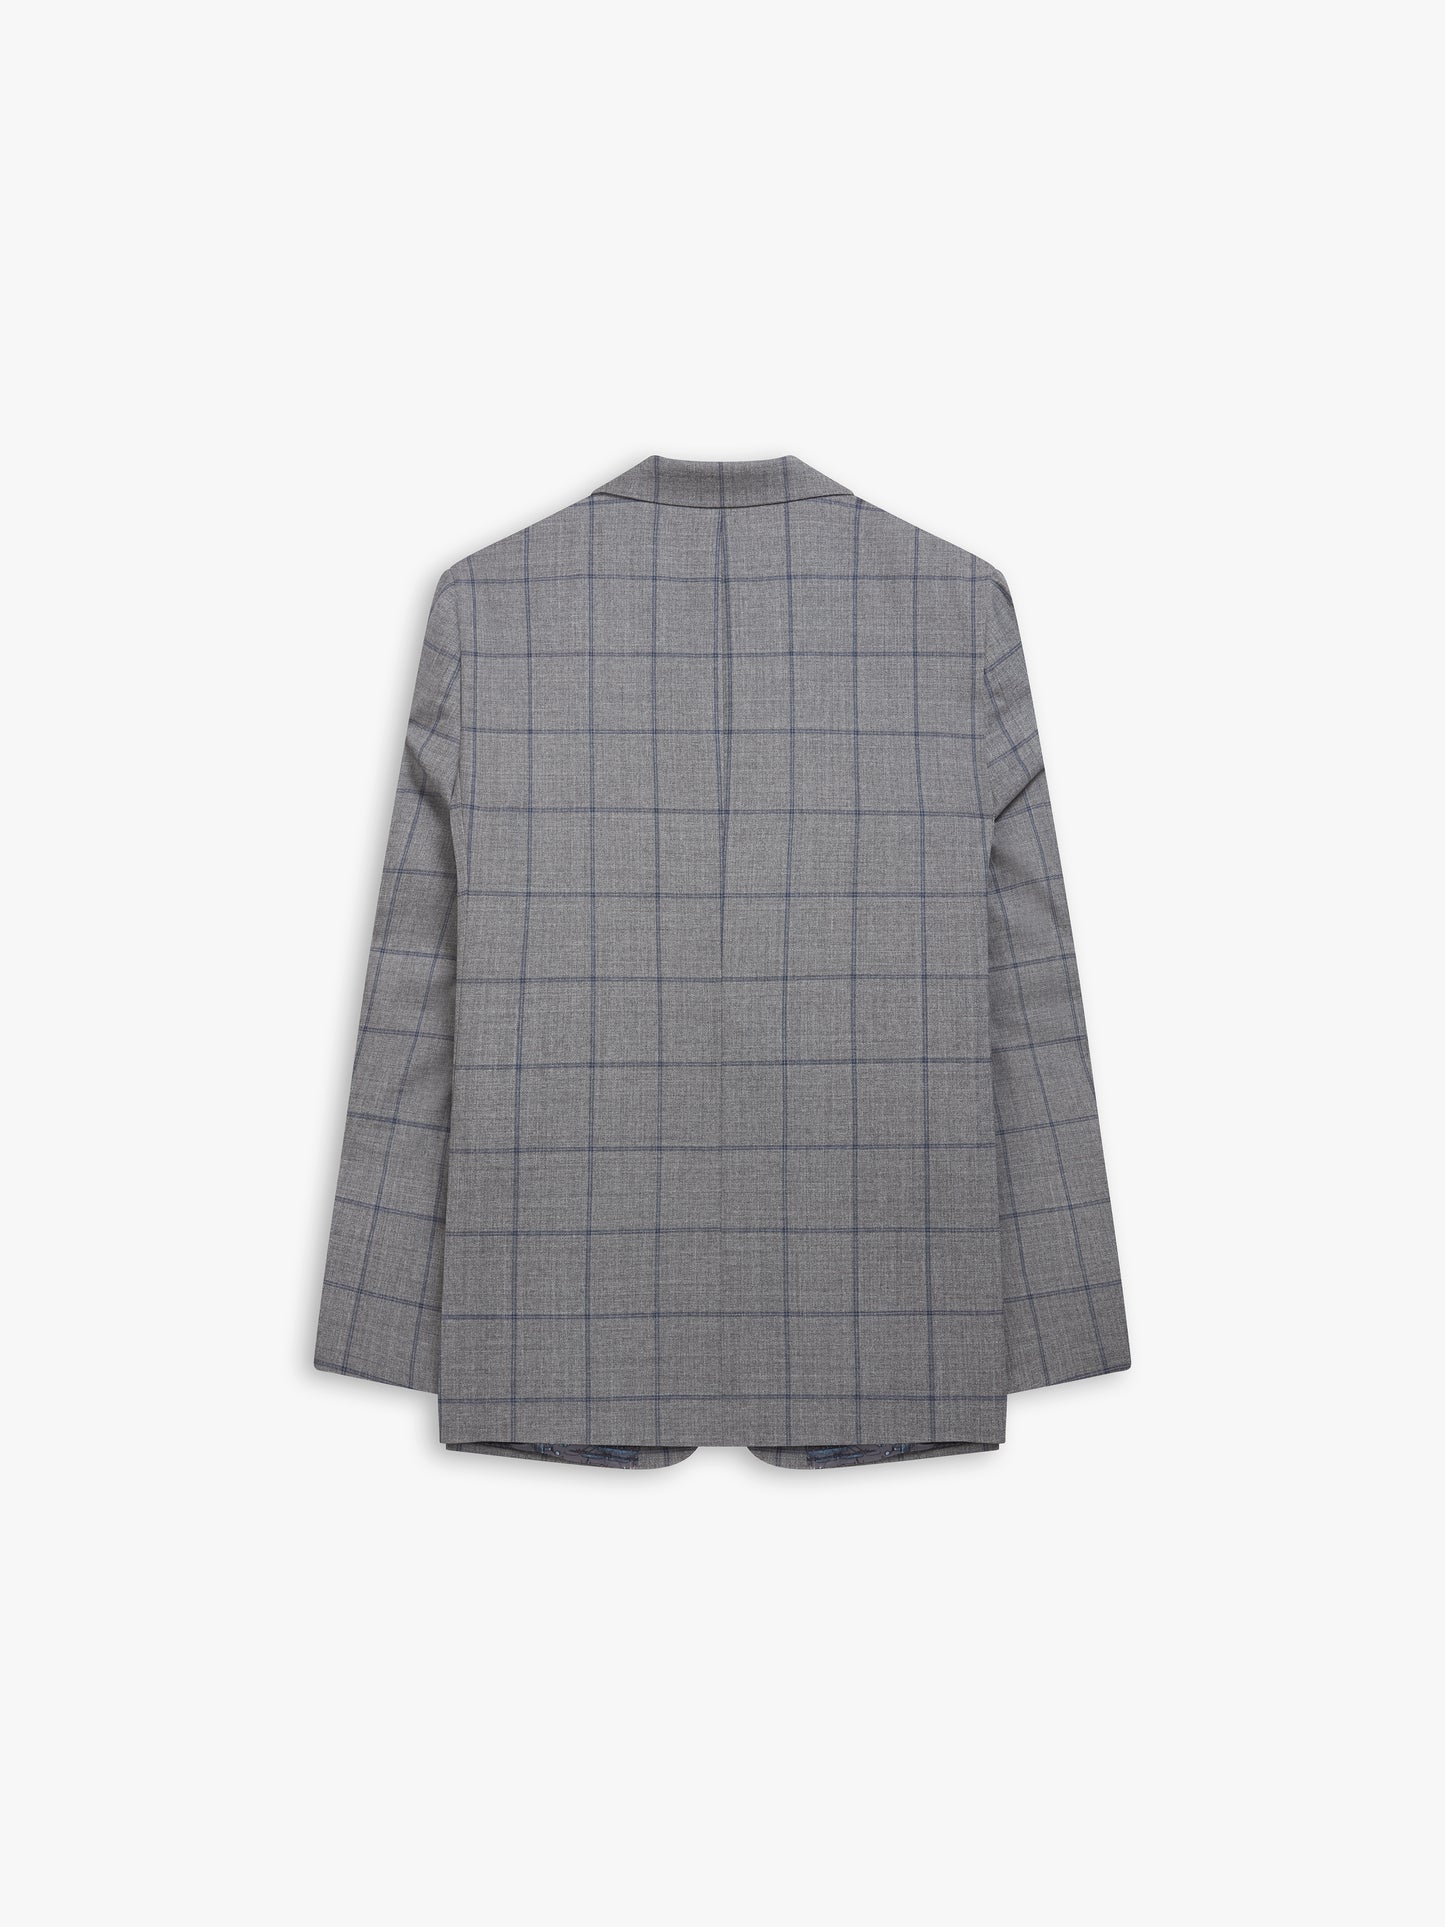 Niro Barberis Slim Fit Grey and Blue Windowpane Check Jacket